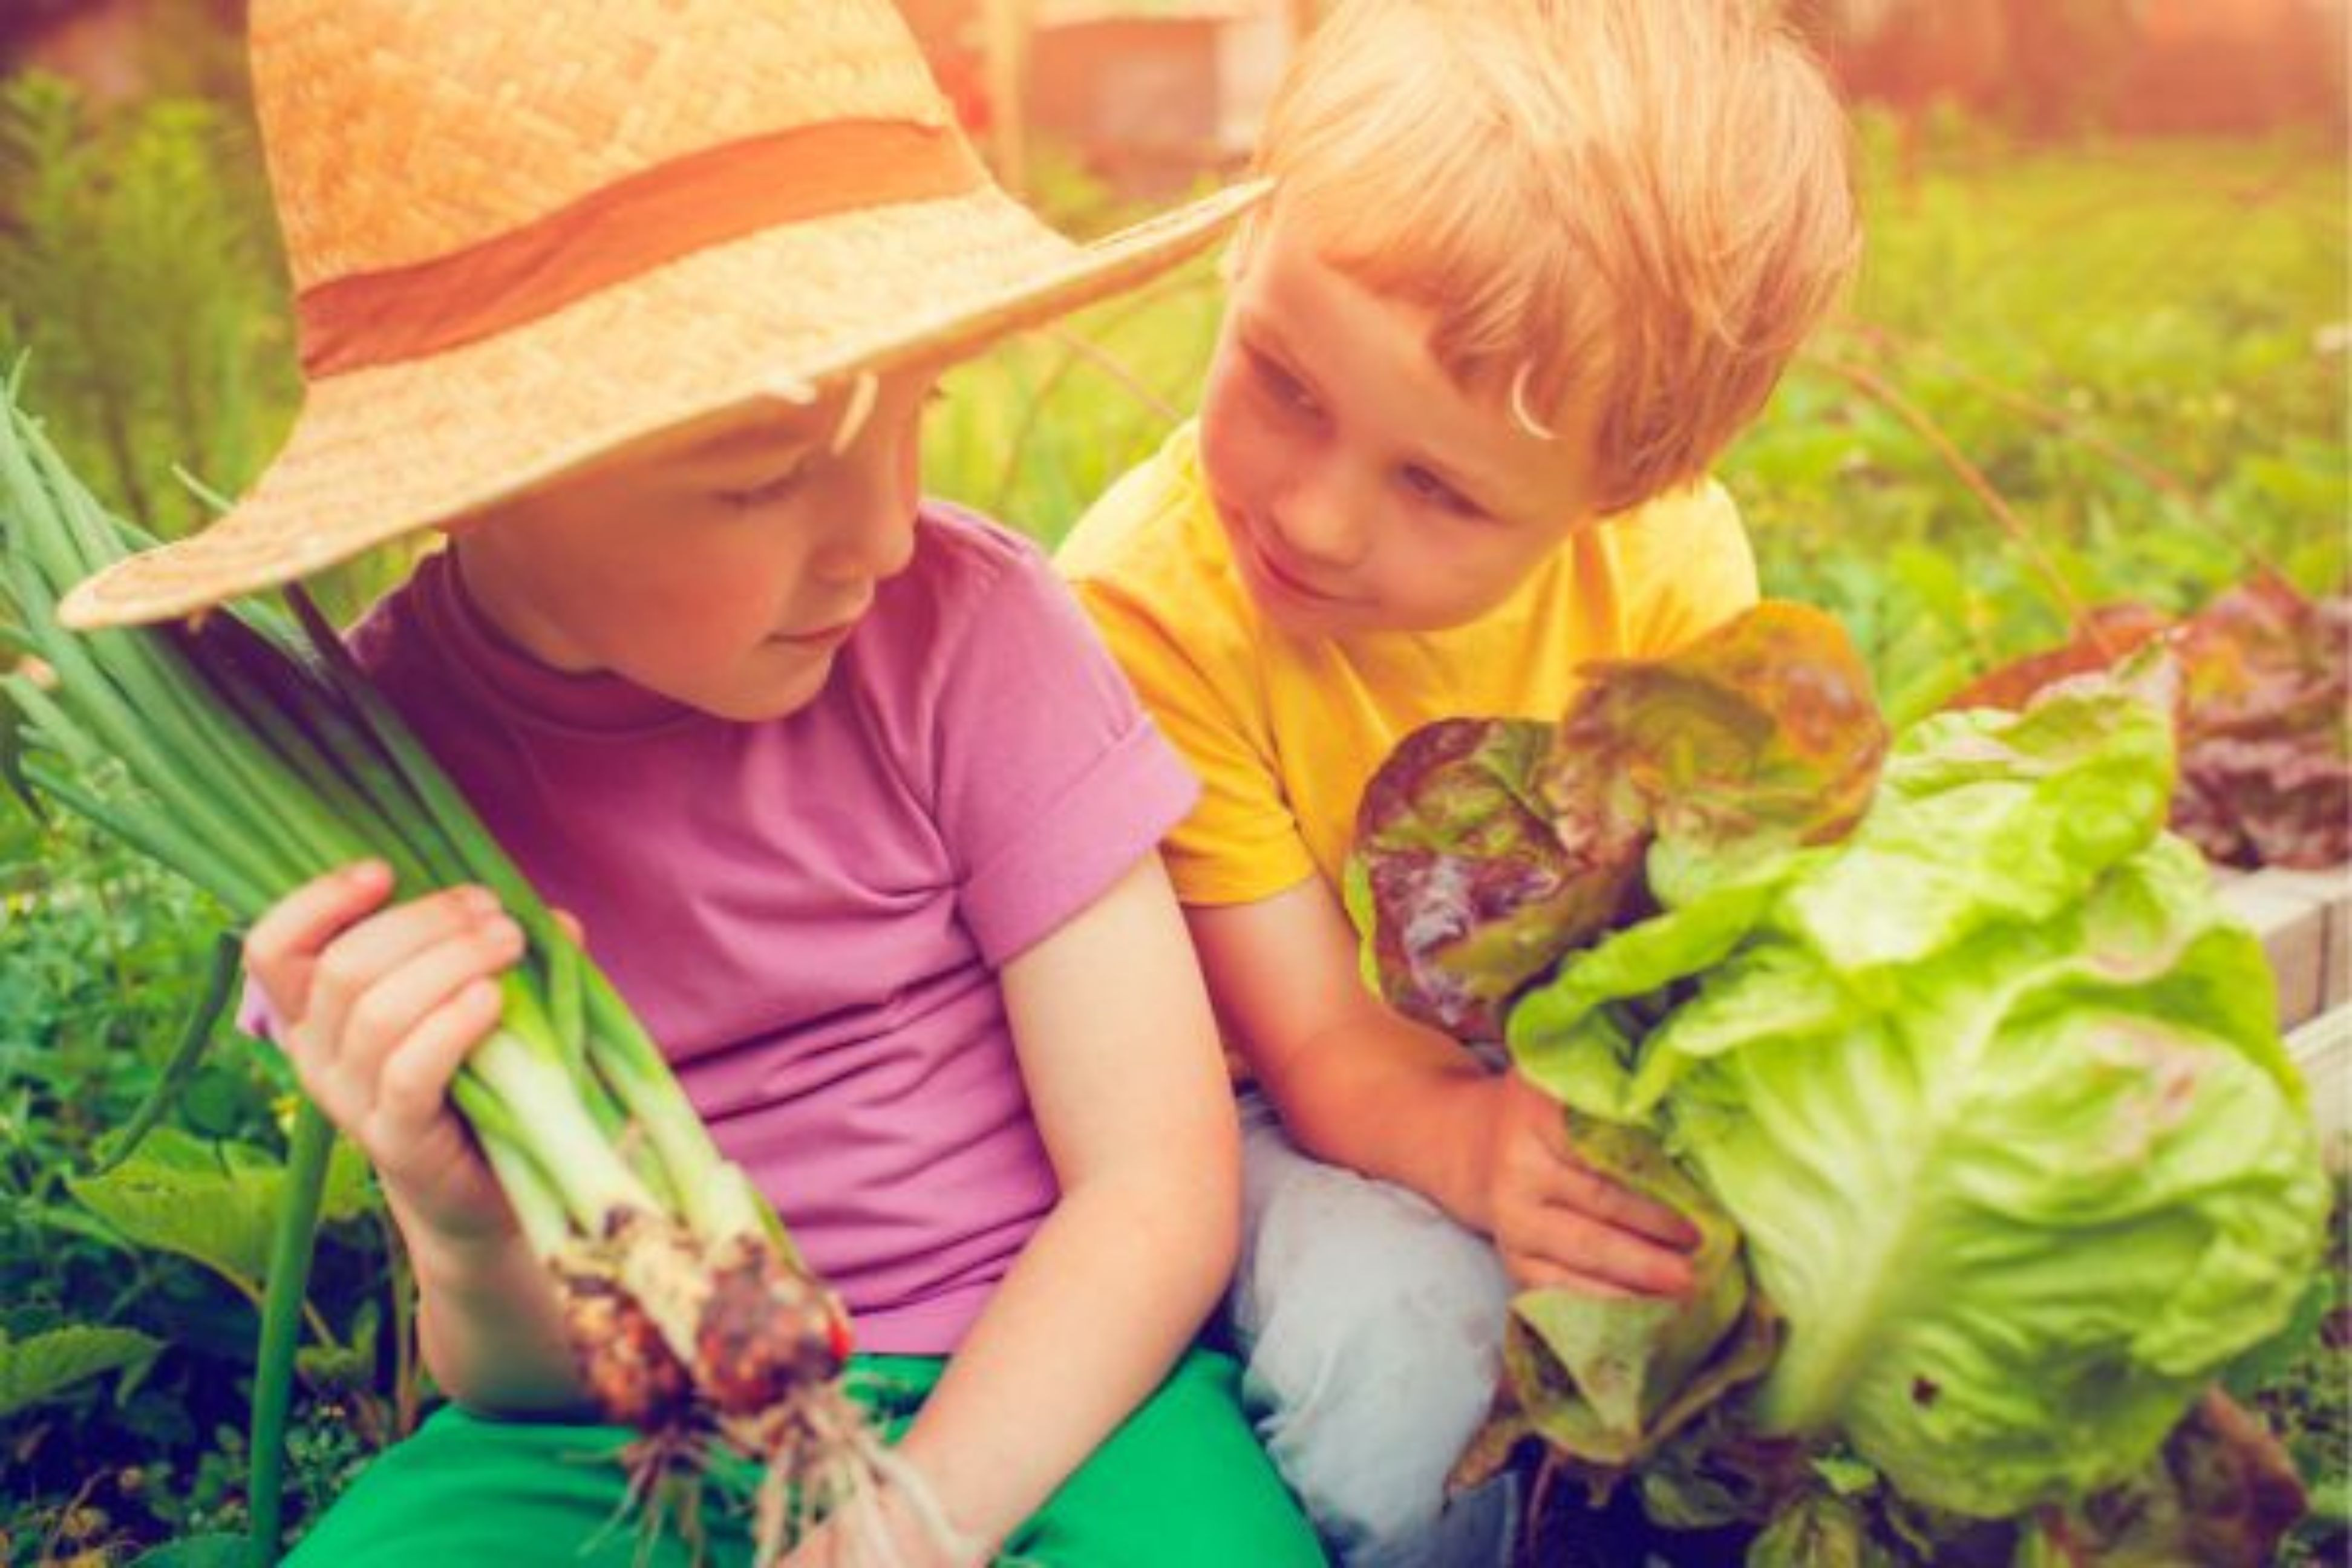 Jardinage : Kit & Ensemble outil jardin enfant pas cher